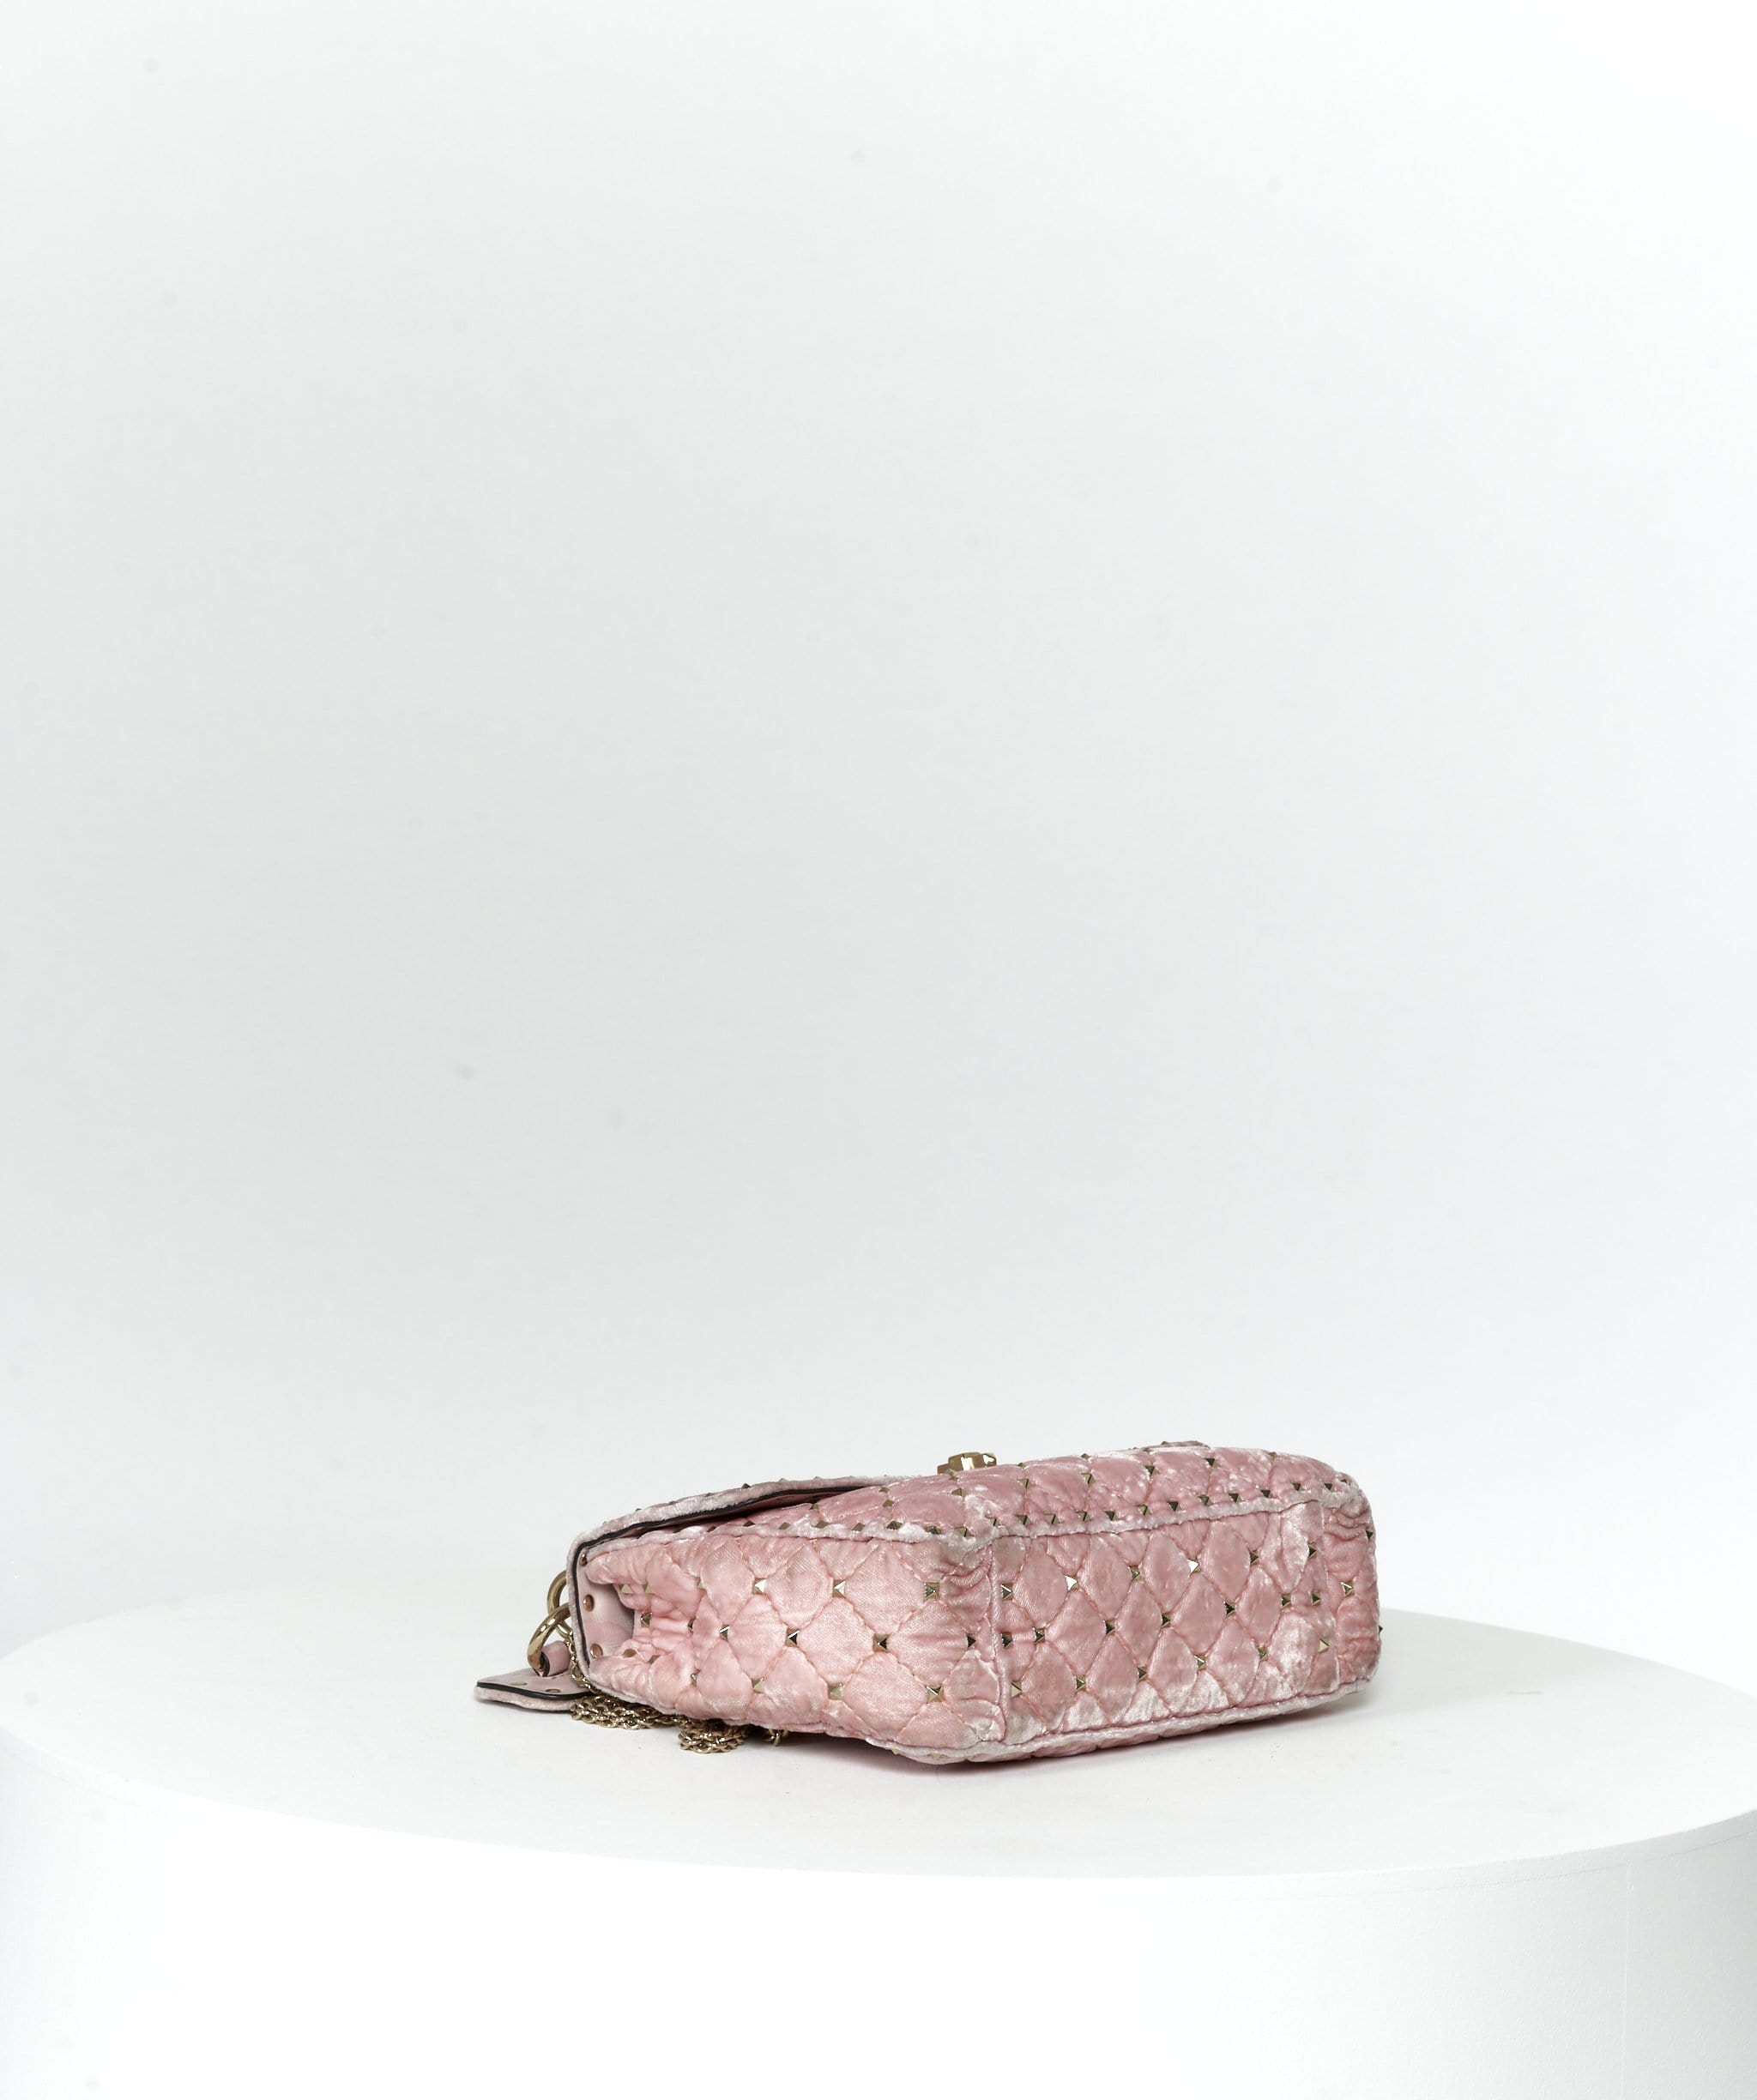 Valentino Valentino pink suede rock stud bag garavani